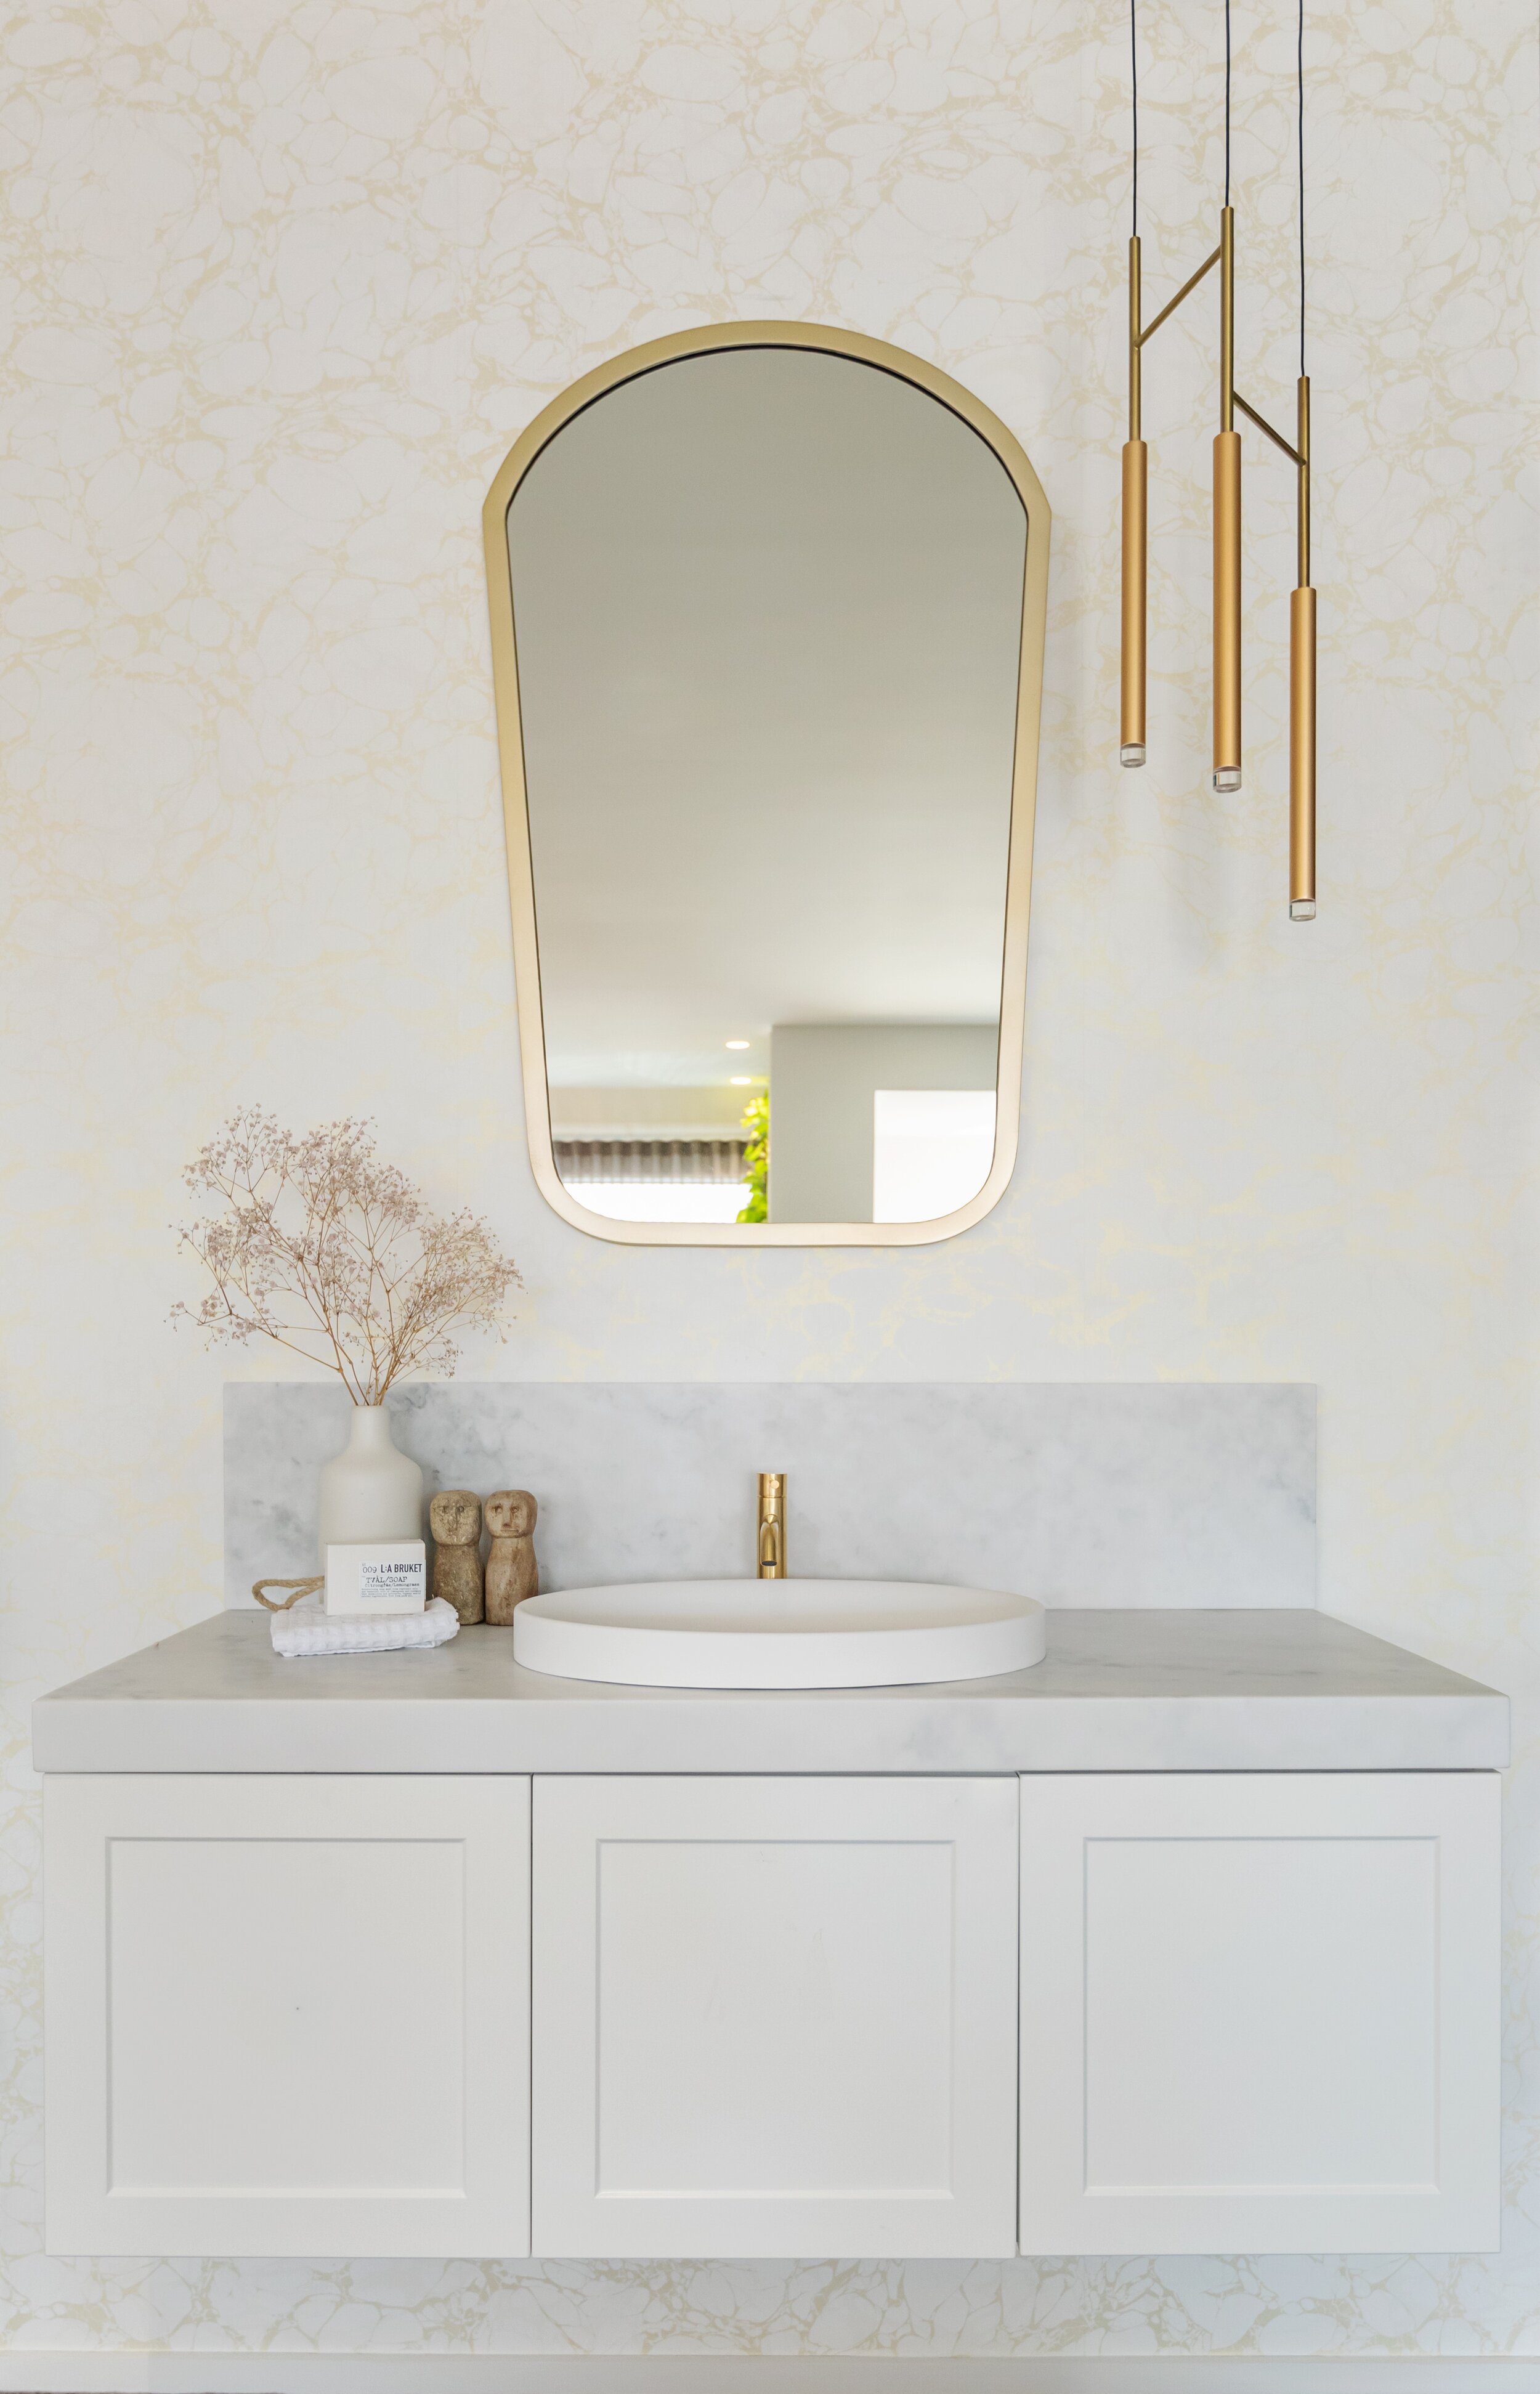 Shaped bathroom mirror in gold frame